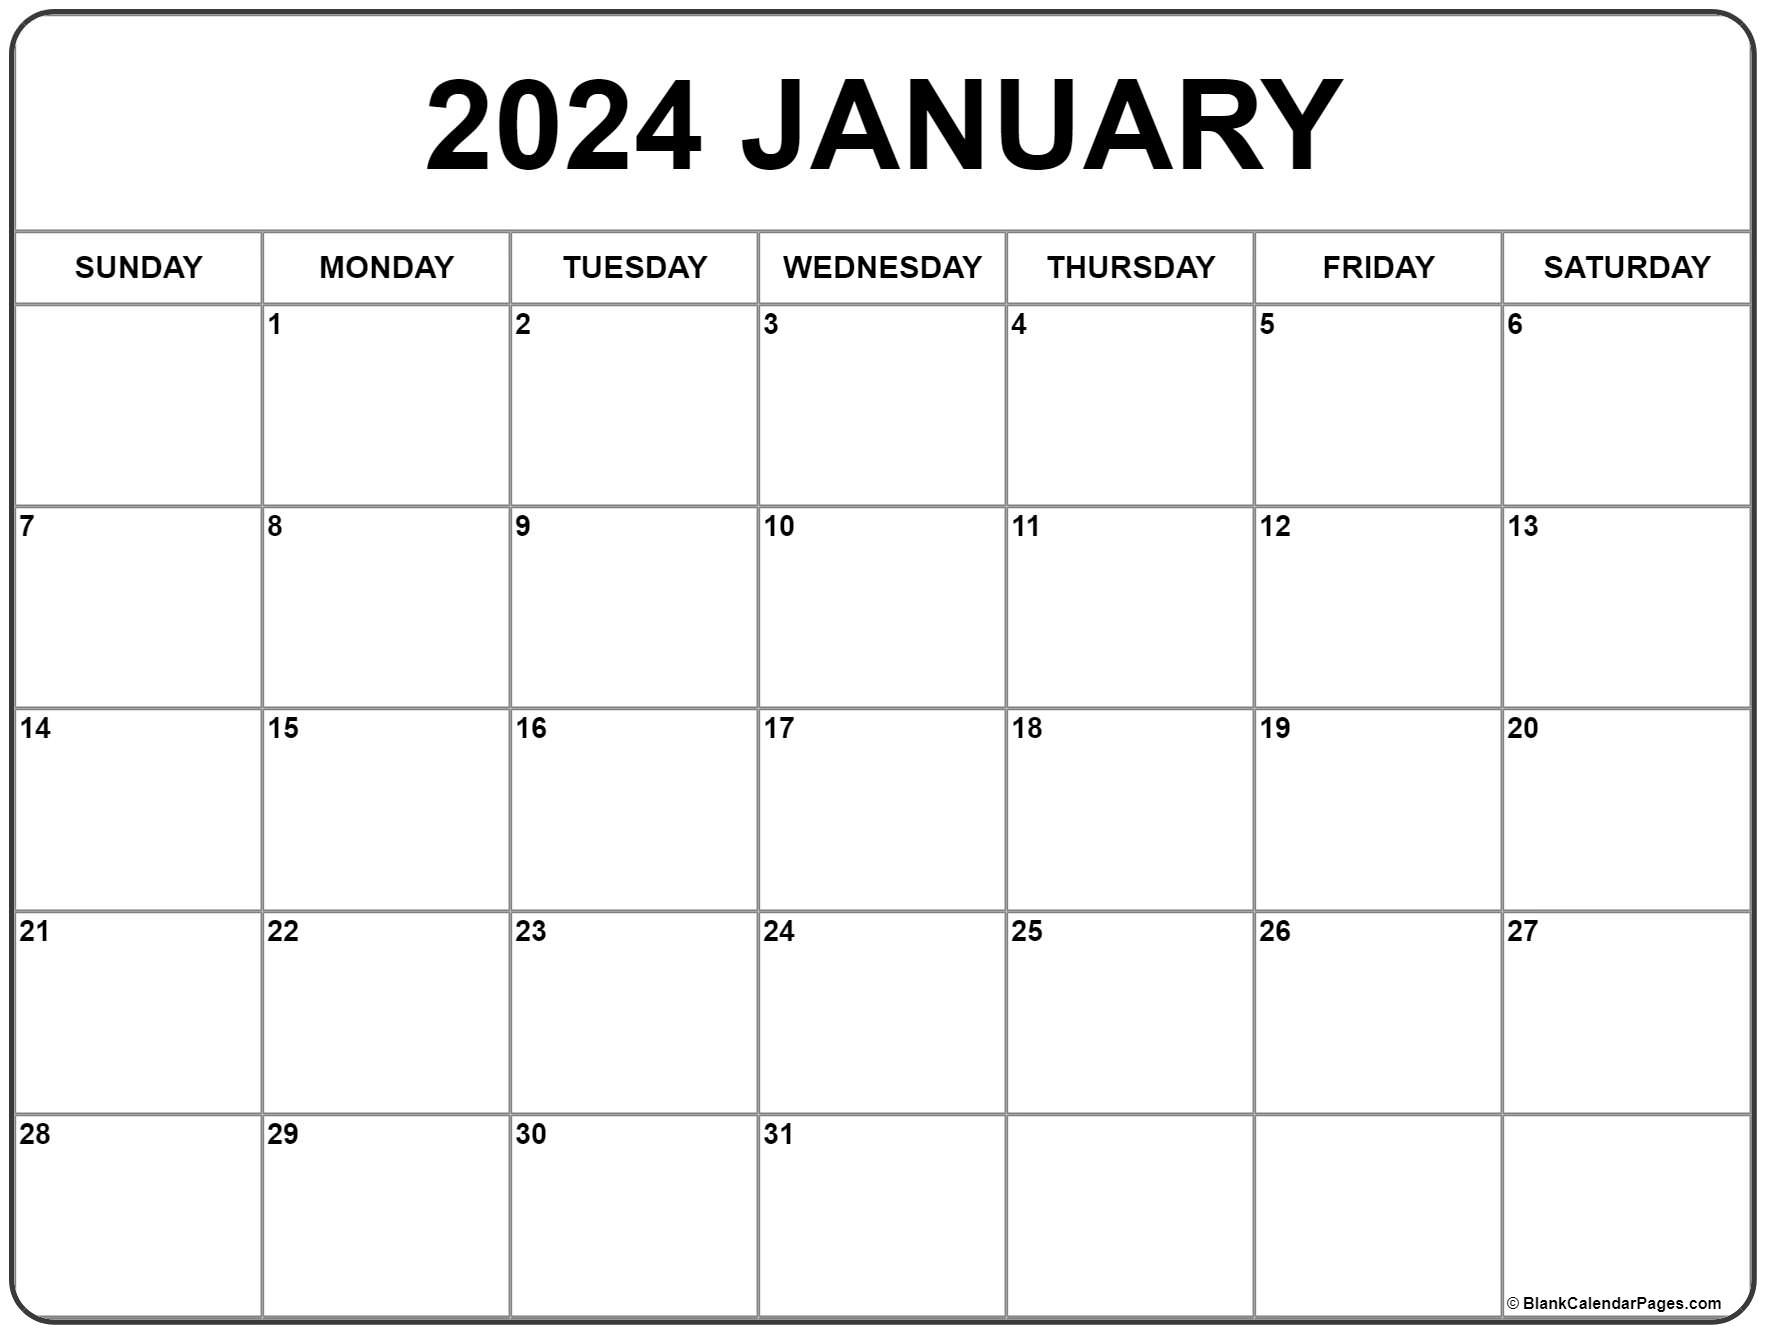 January 2024 Calendar | Free Printable Calendar for Free Blank Calendar 2024 Printable